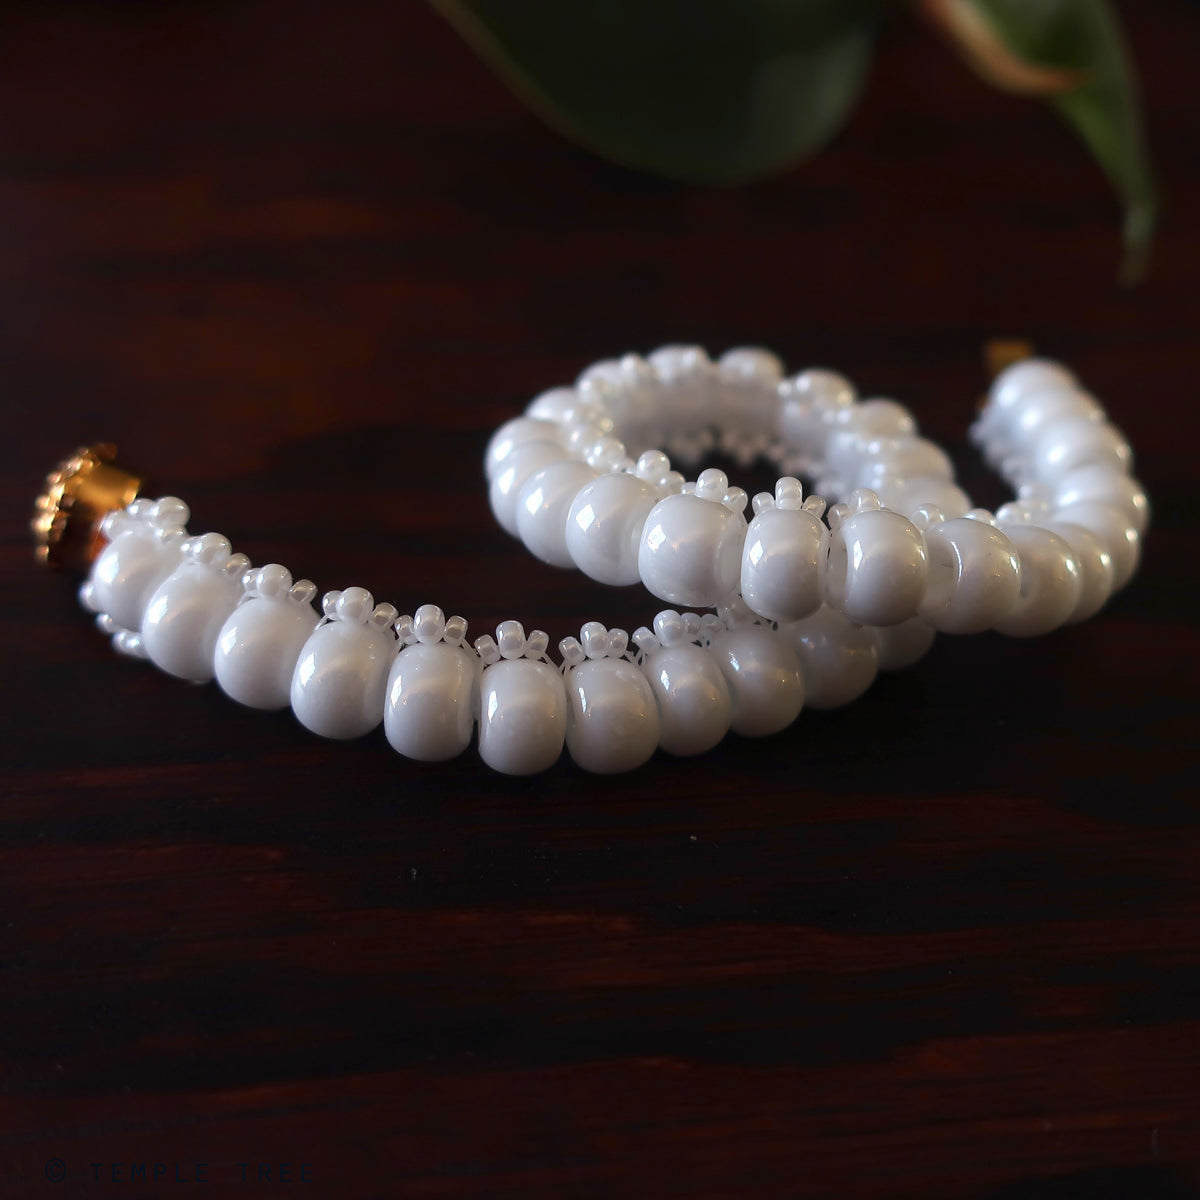 Temple Tree Bohemian Glass Bead Caterpillar Weave Bracelet - Pearly White